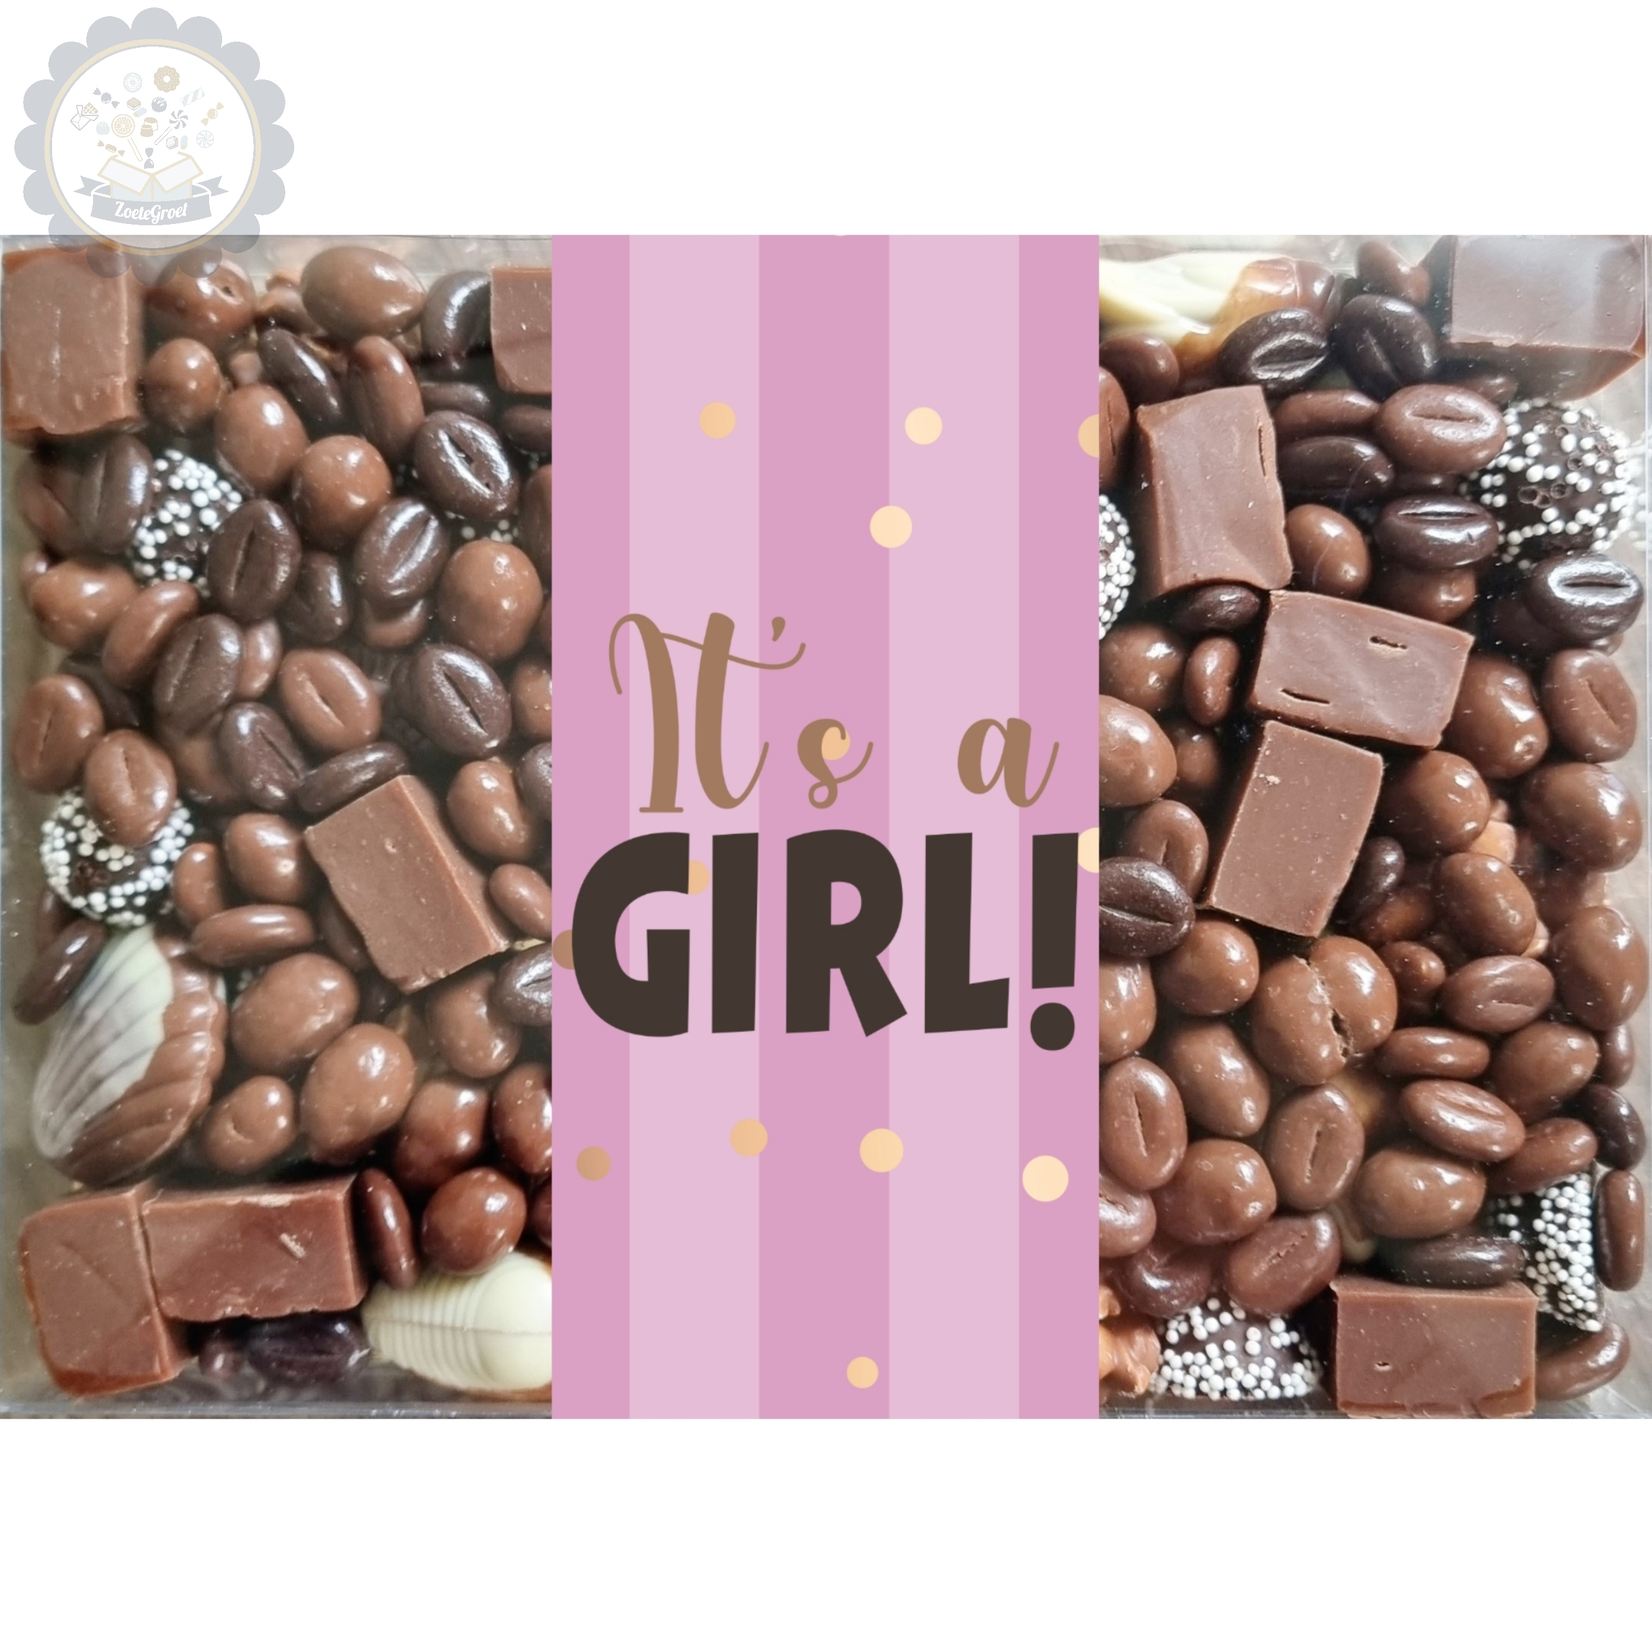 ZoeteGroet Medium Chocobox: It's a Girl!